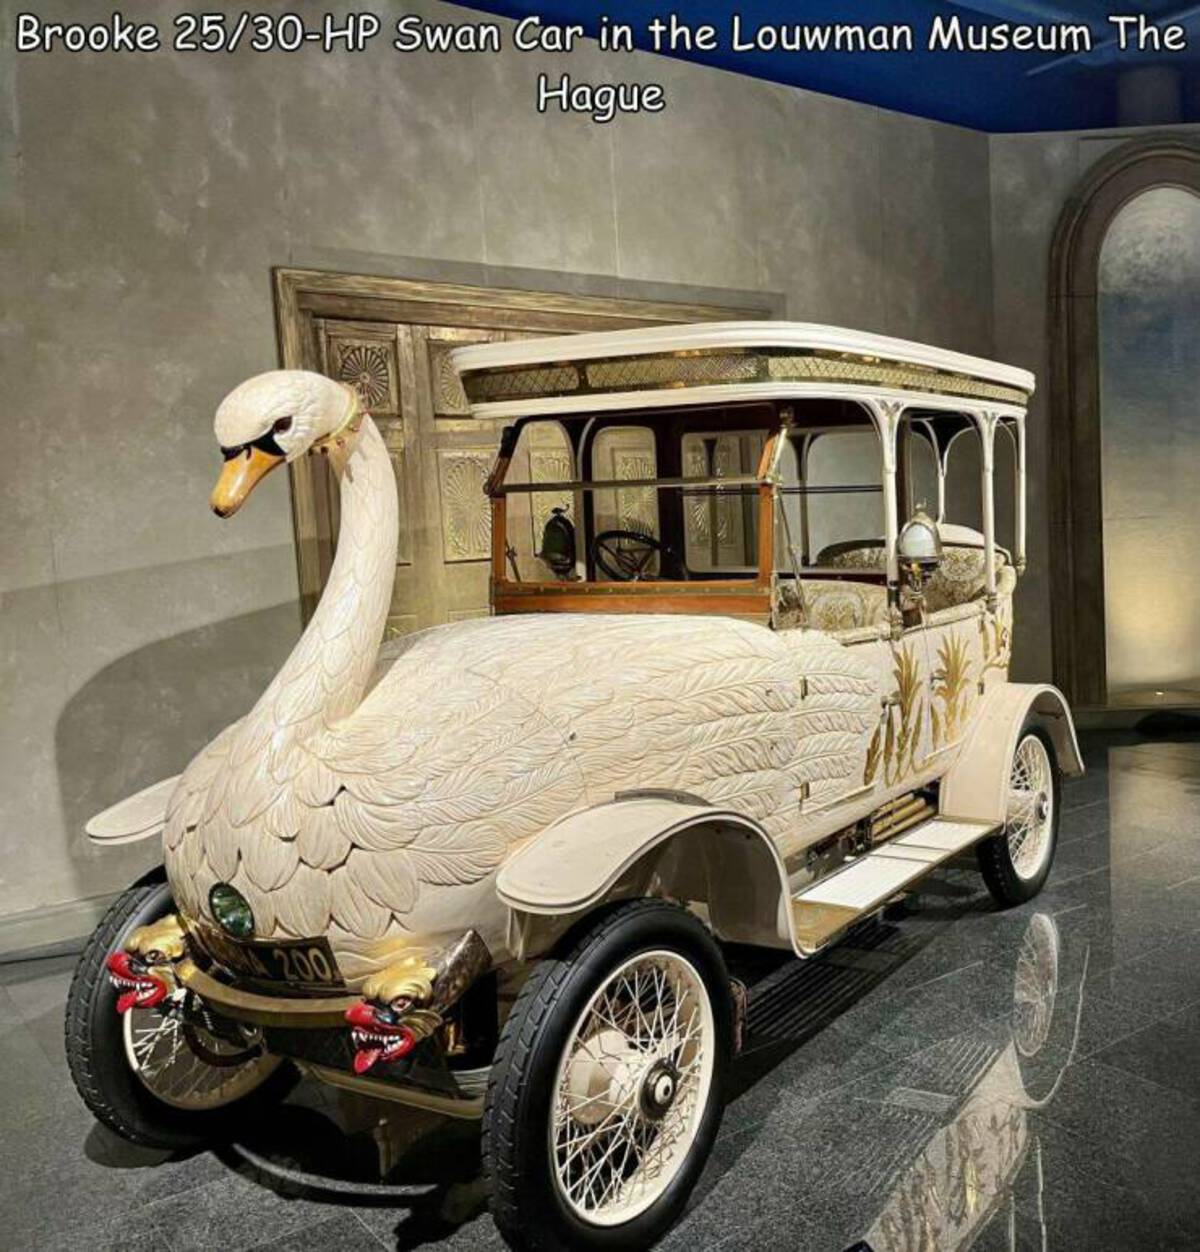 vintage car - Brooke 2530Hp Swan Car in the Louwman Museum The Hague 200